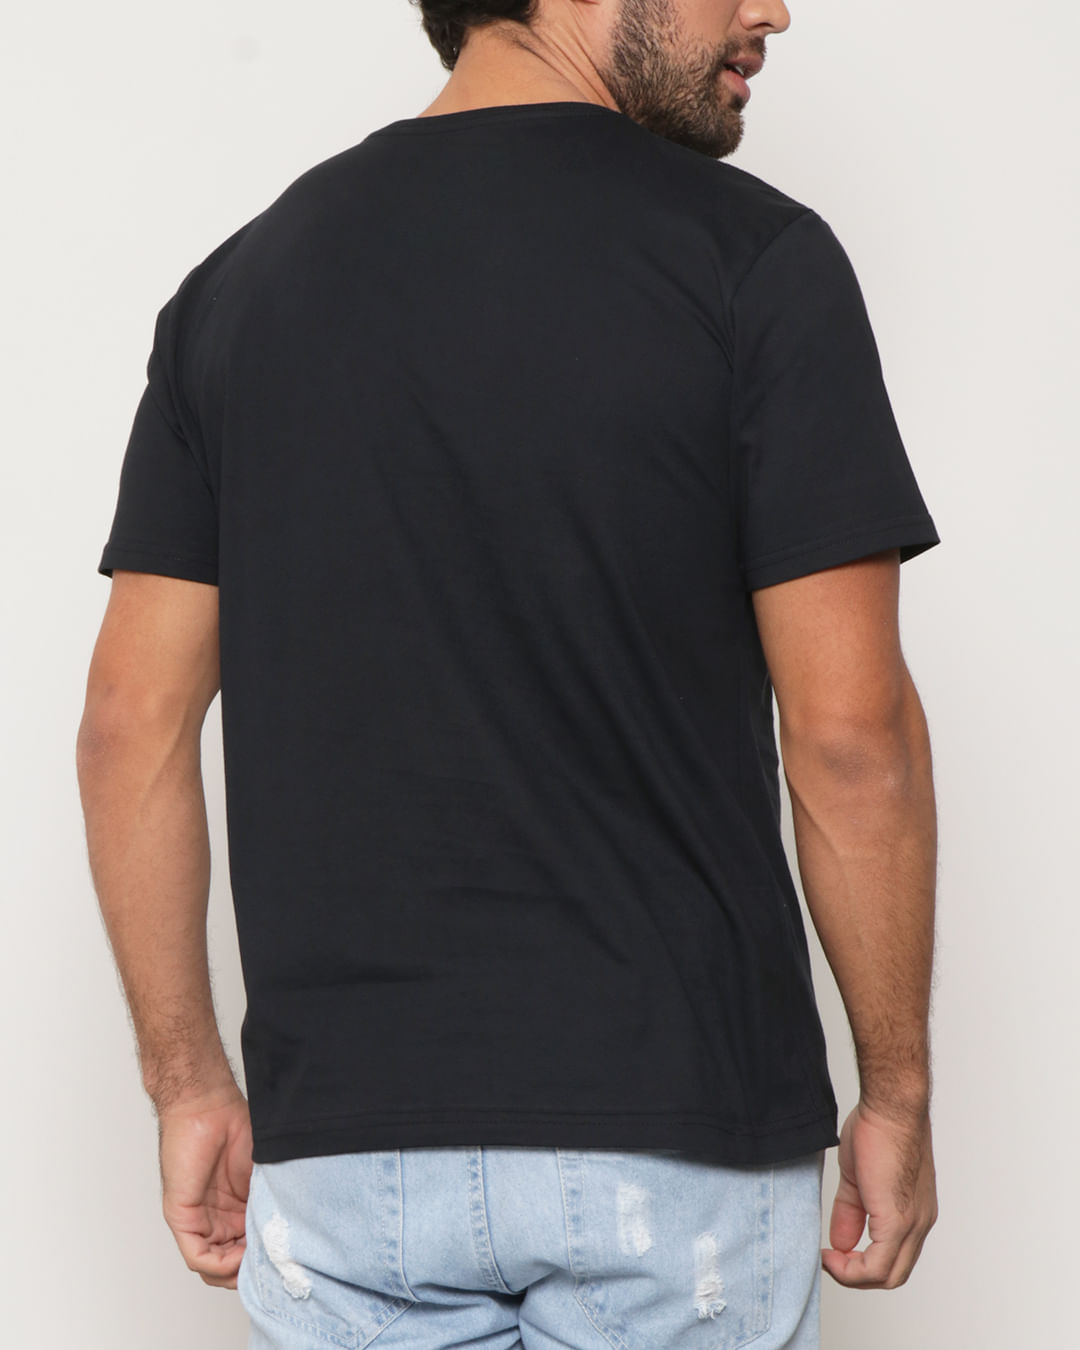 Camiseta-Masculina-Manga-Curta-Estampa-Caveira-Preta